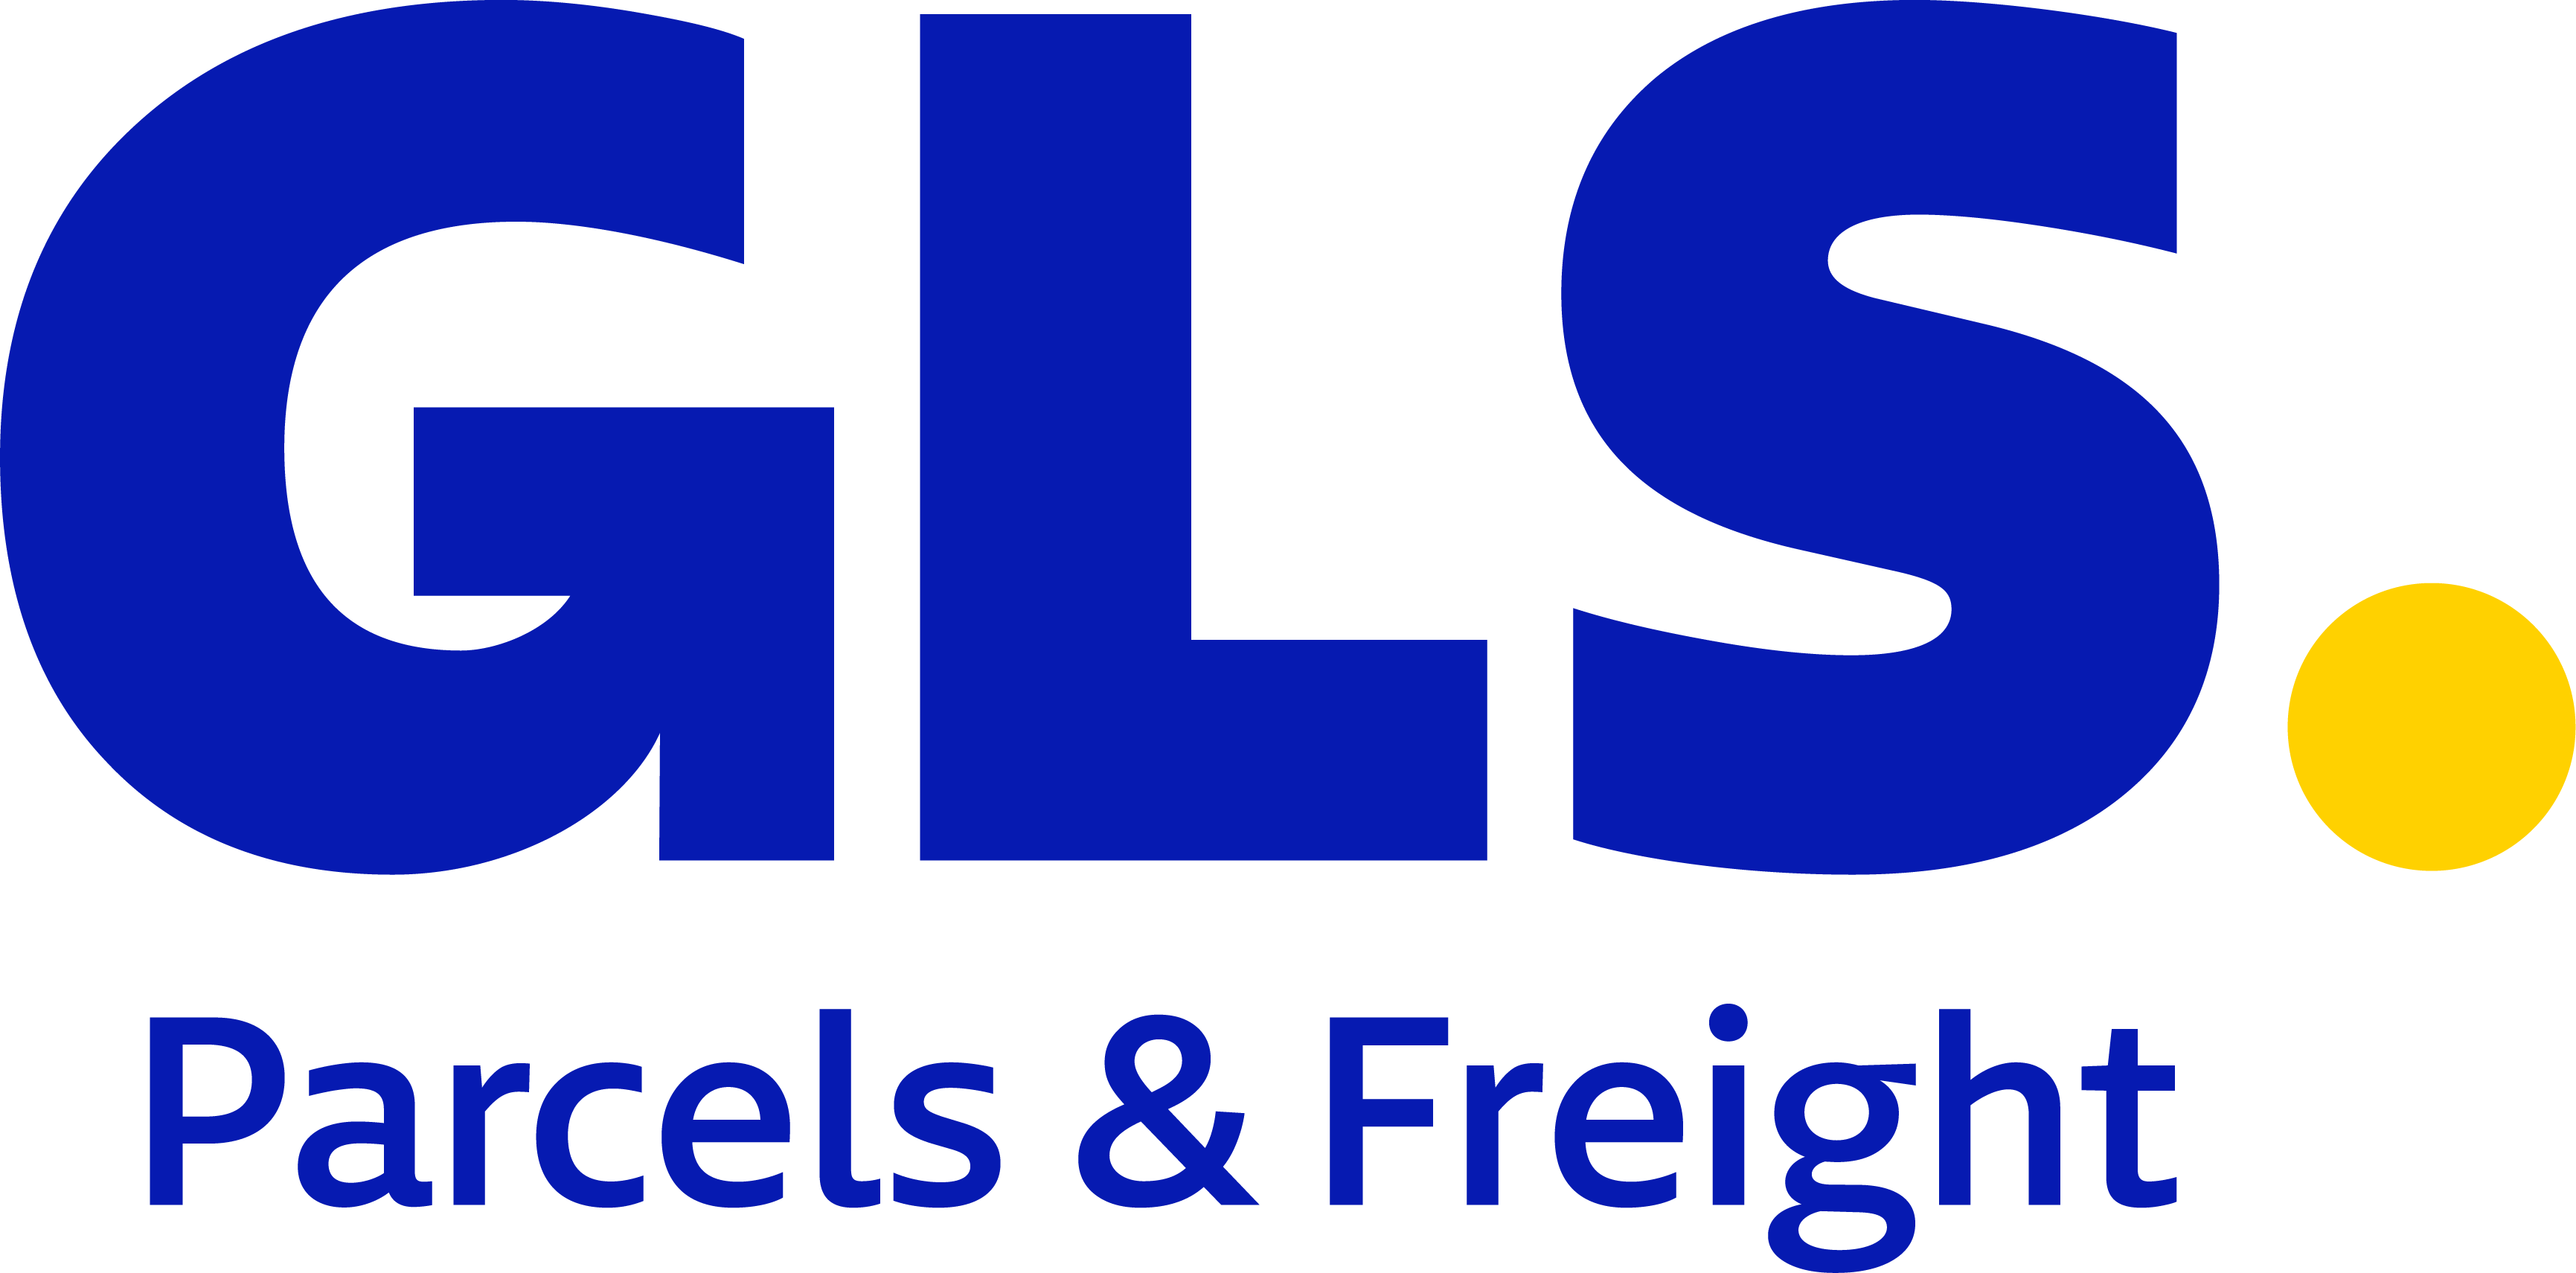 GLS-logo